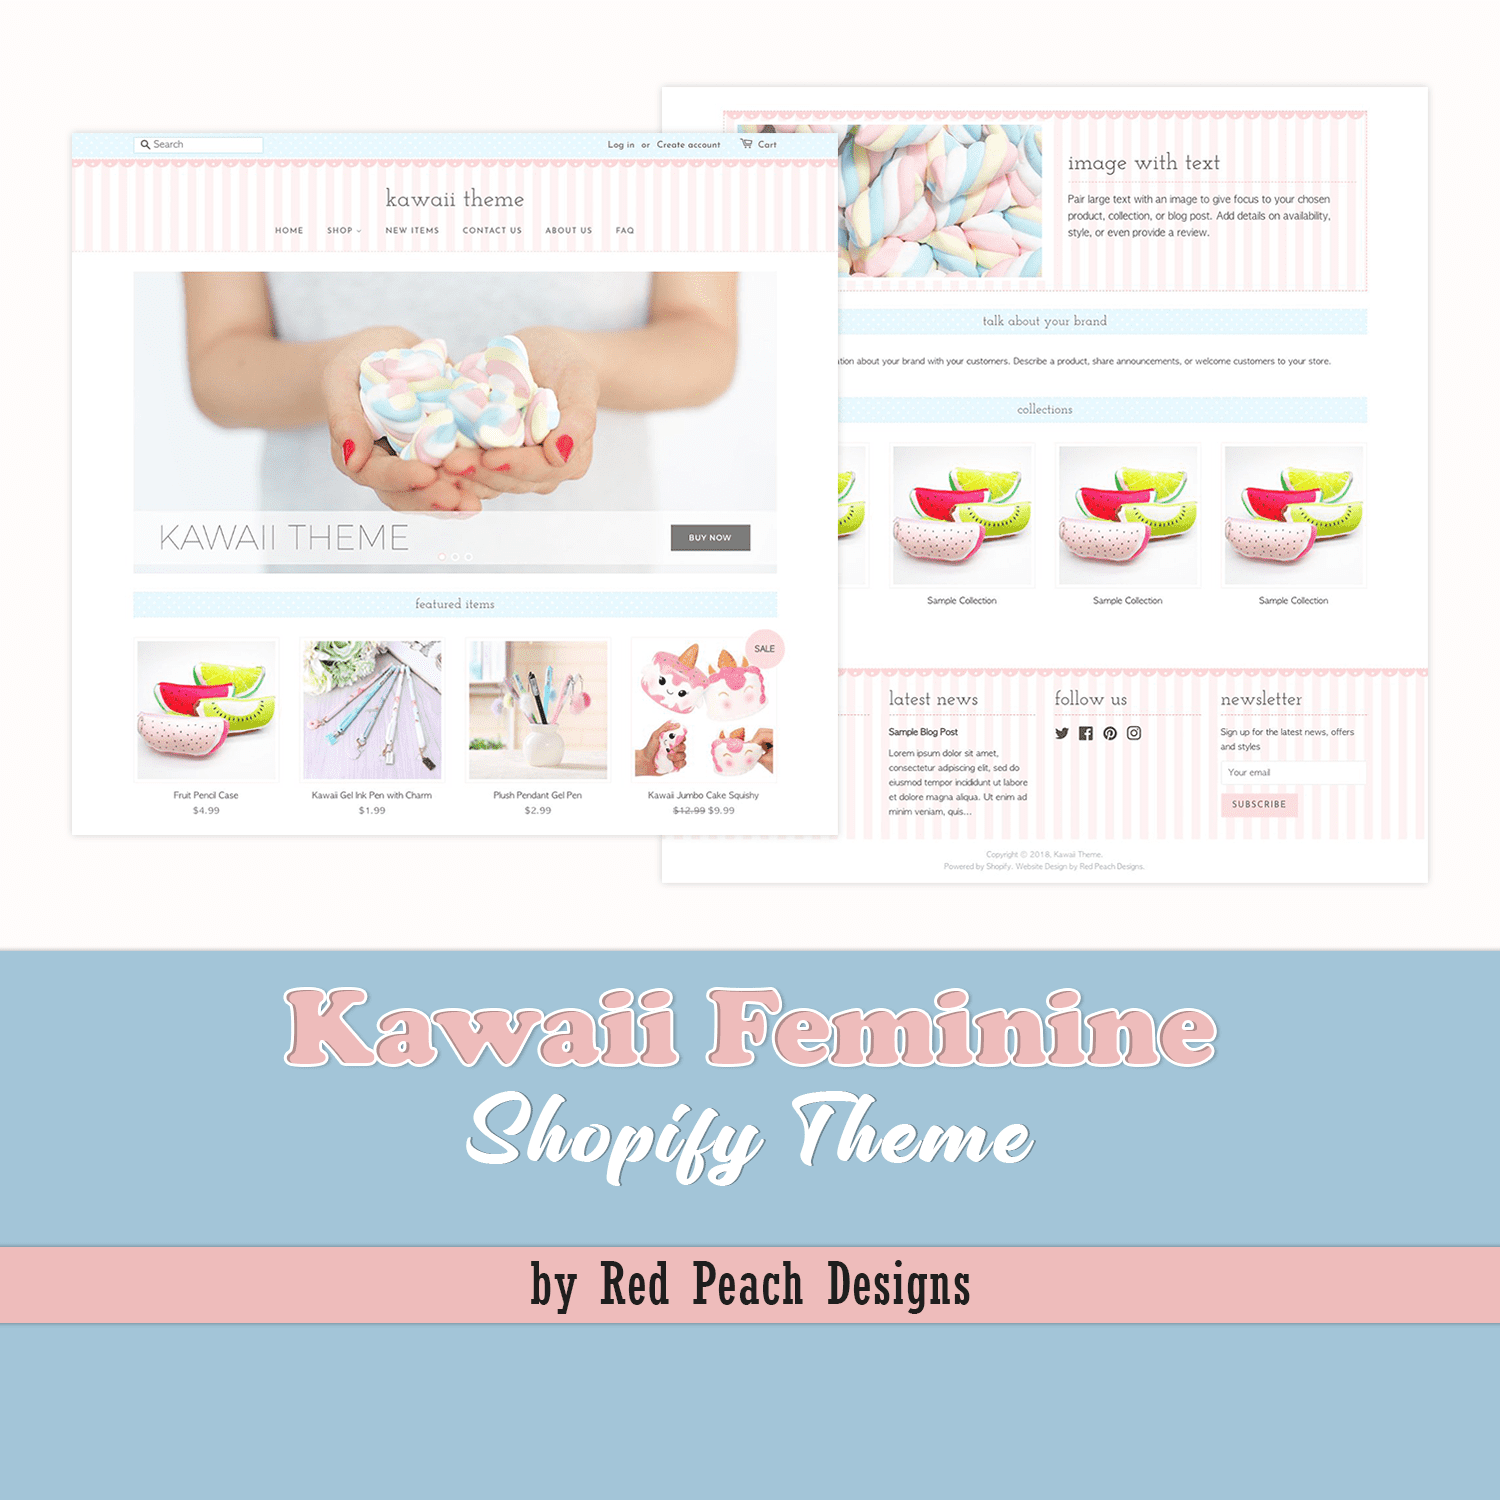 Sample collection of Kawaii Feminine Shopify Theme.